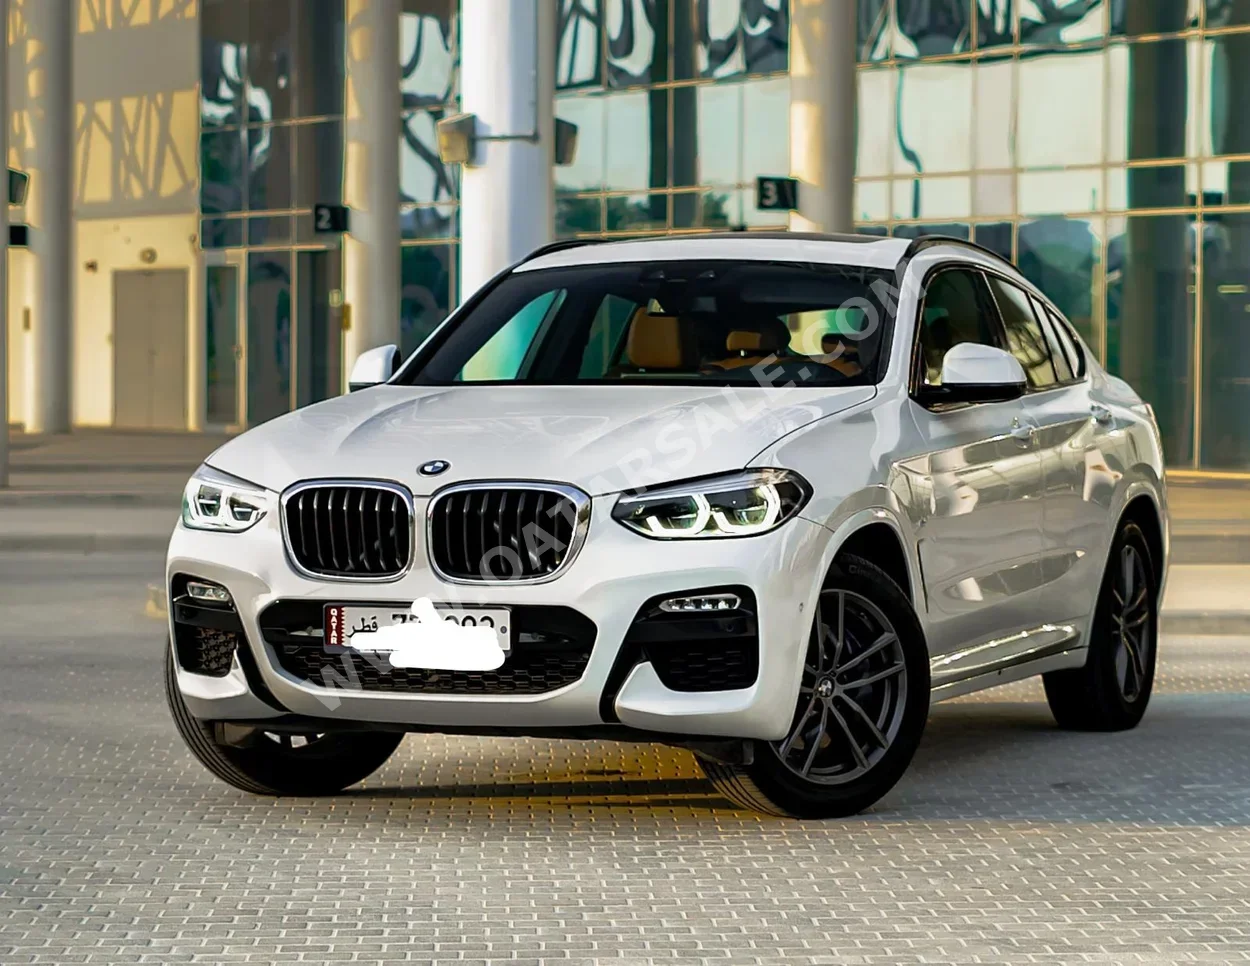 BMW  X-Series  X4  2019  Automatic  39,000 Km  4 Cylinder  Four Wheel Drive (4WD)  SUV  White